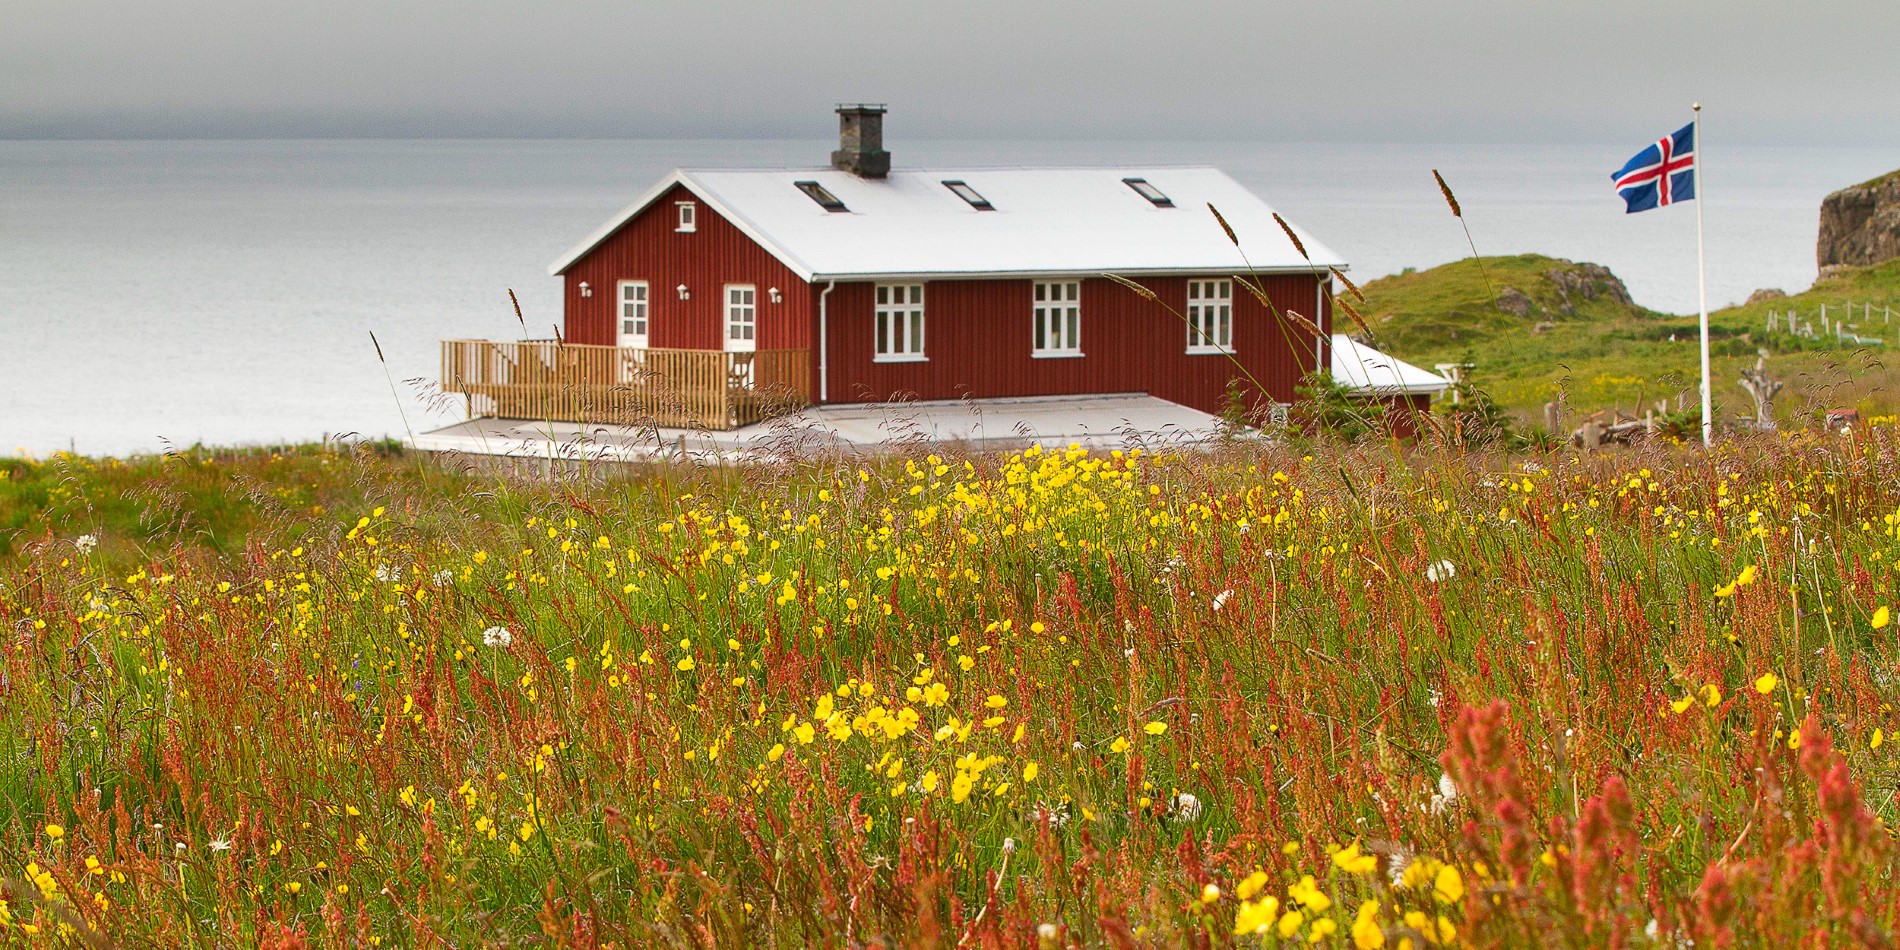 The sympathetically renovated Icelandic farmhouse of Skalanes